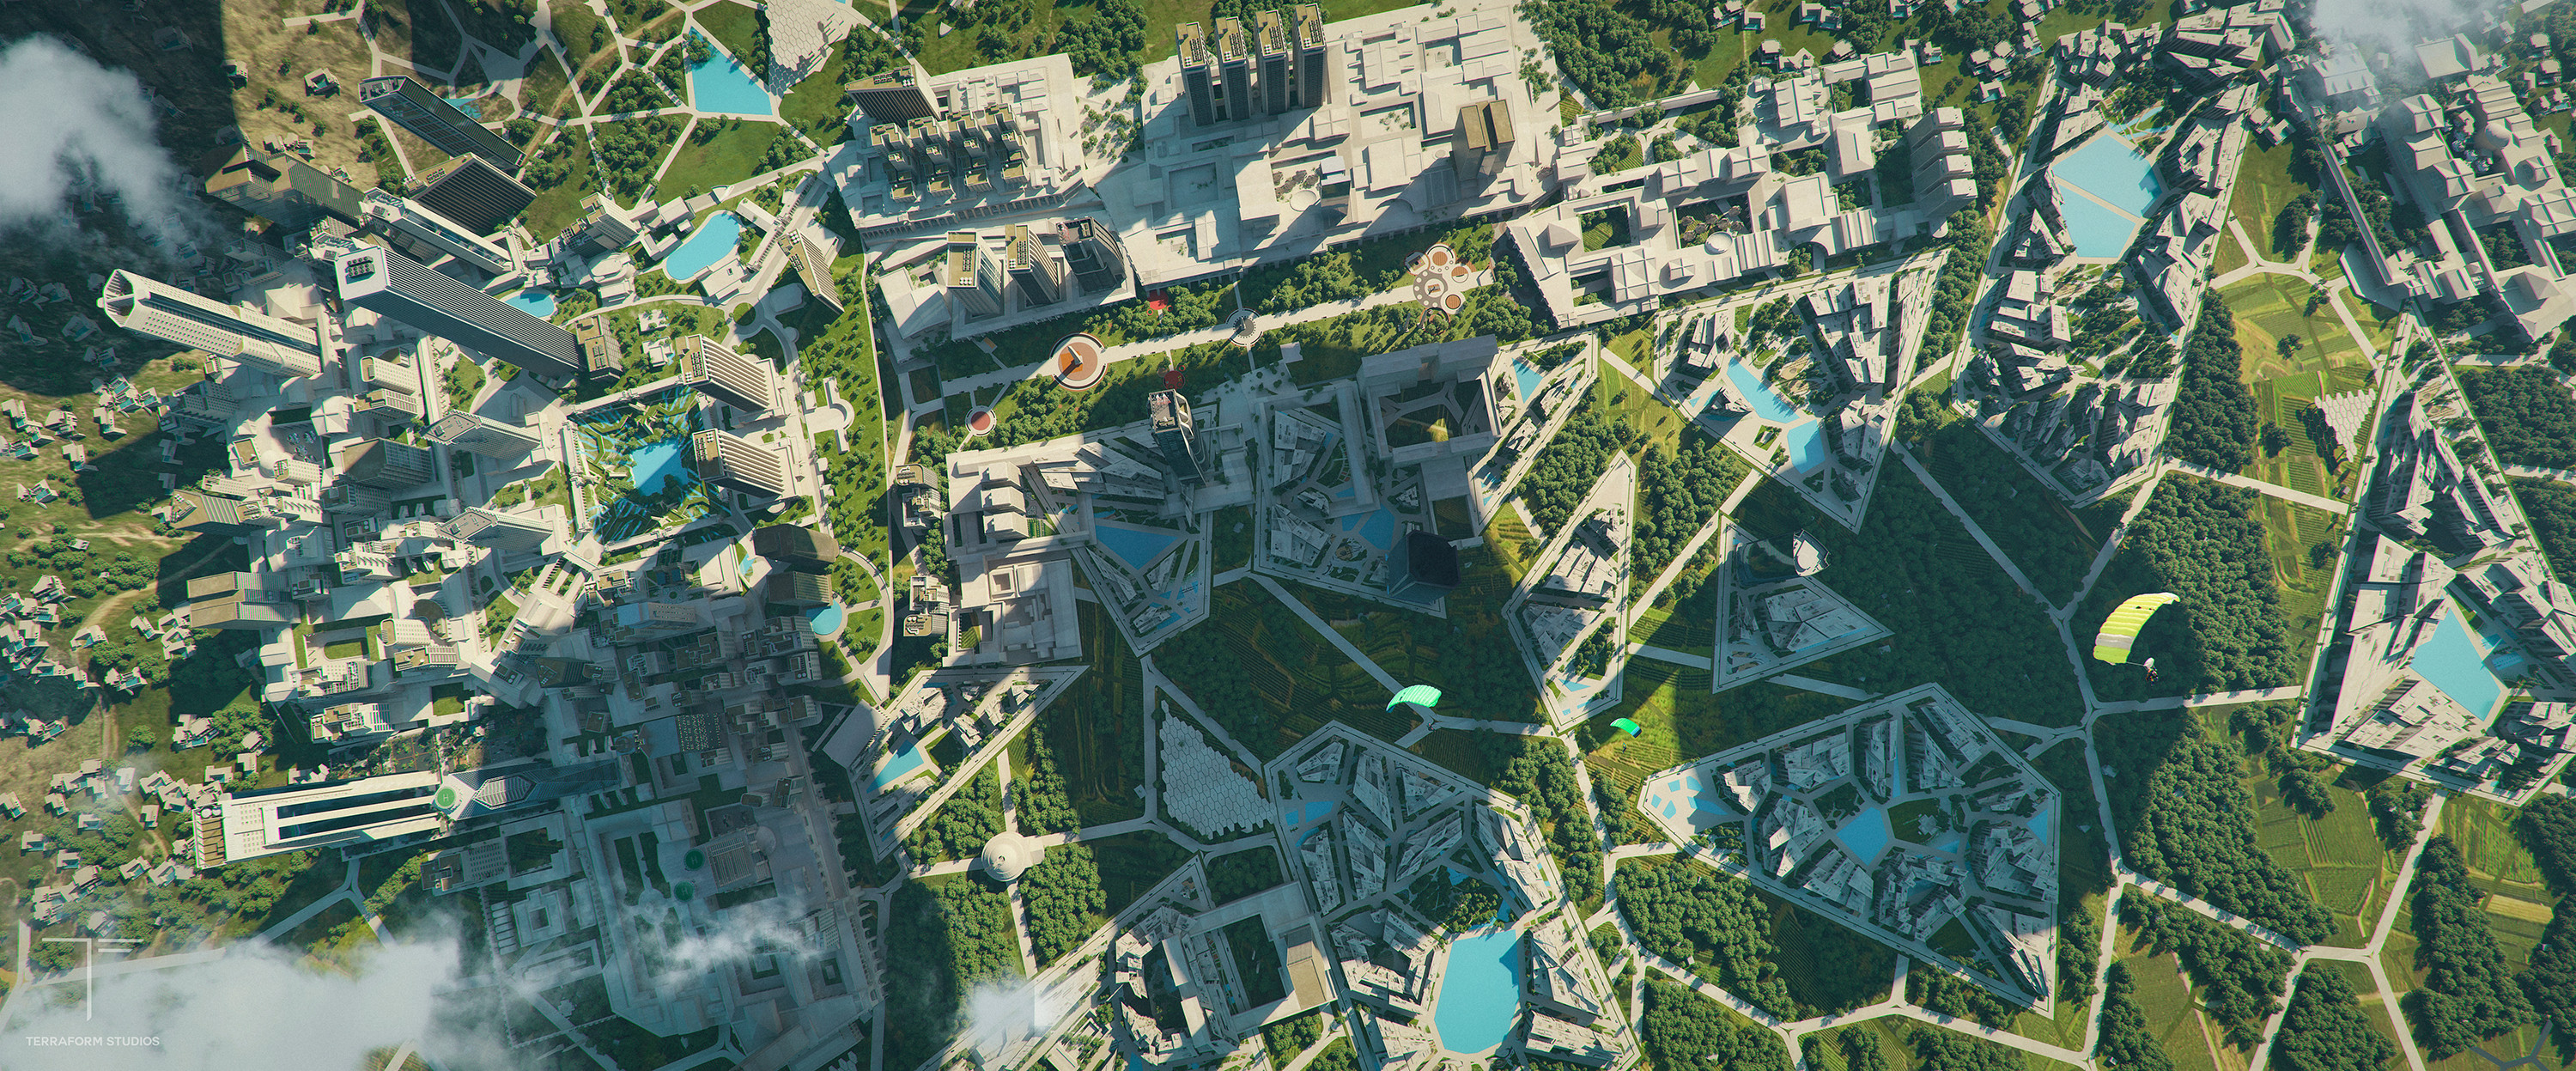 Cityscape Aerial View Digital Art Artwork 3000x1247